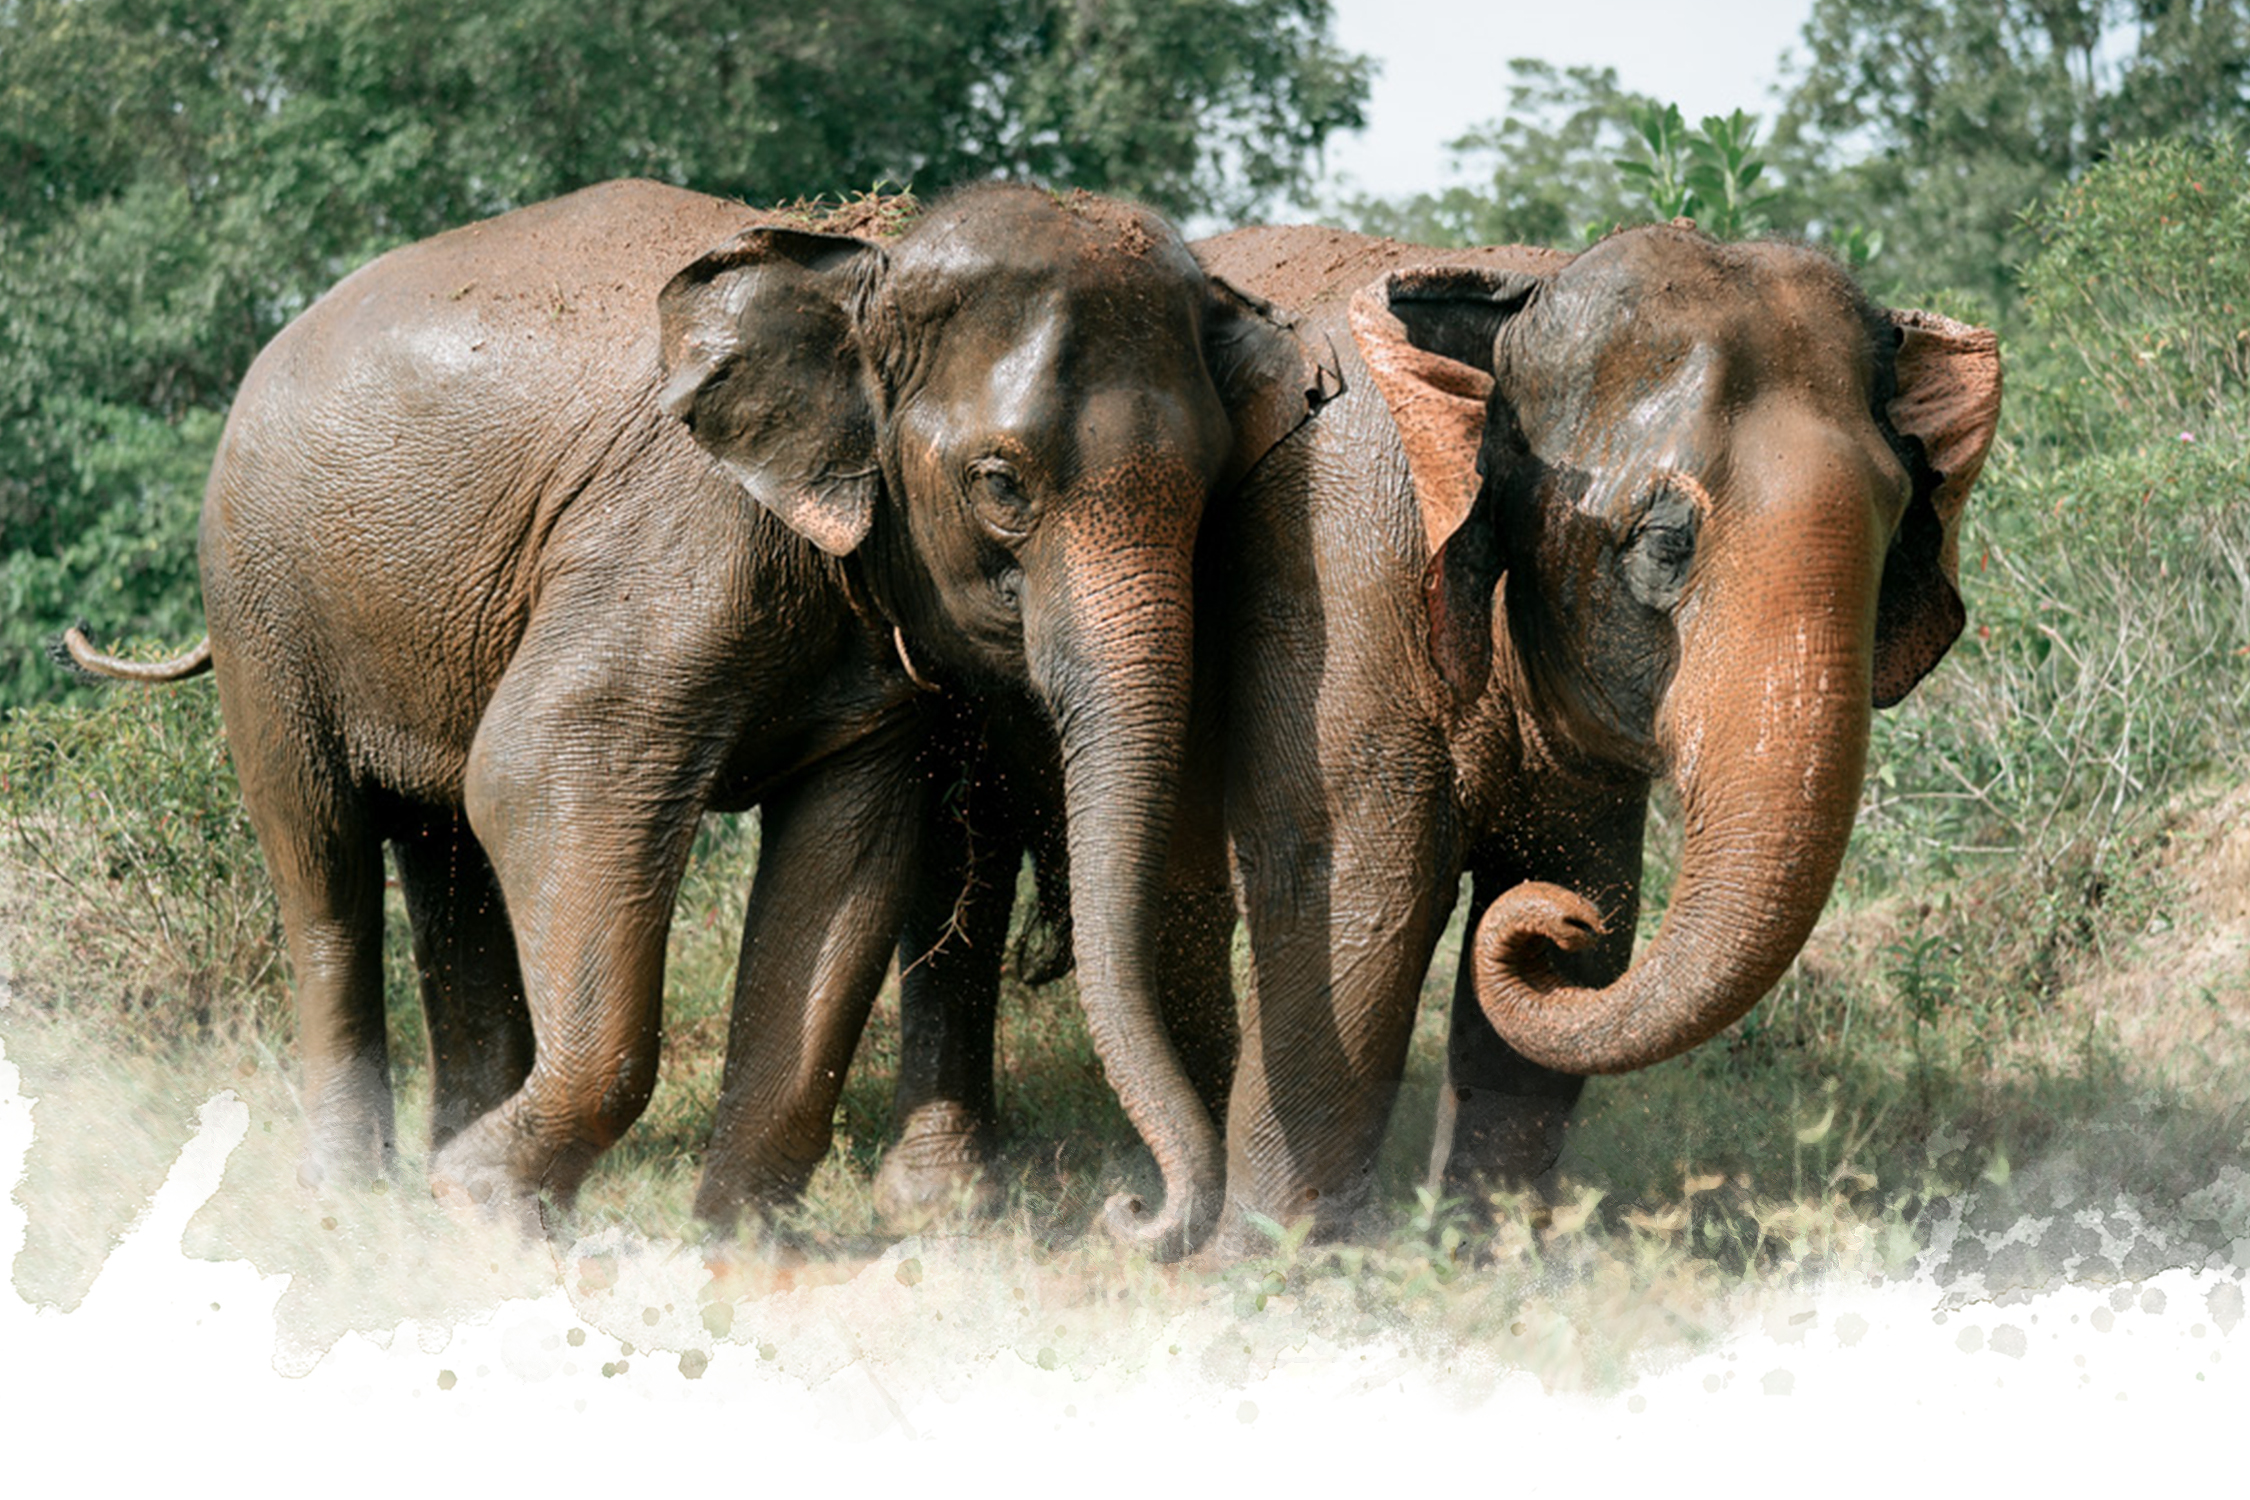 Our Sanctuary - Phuket Elephant Sanctuary